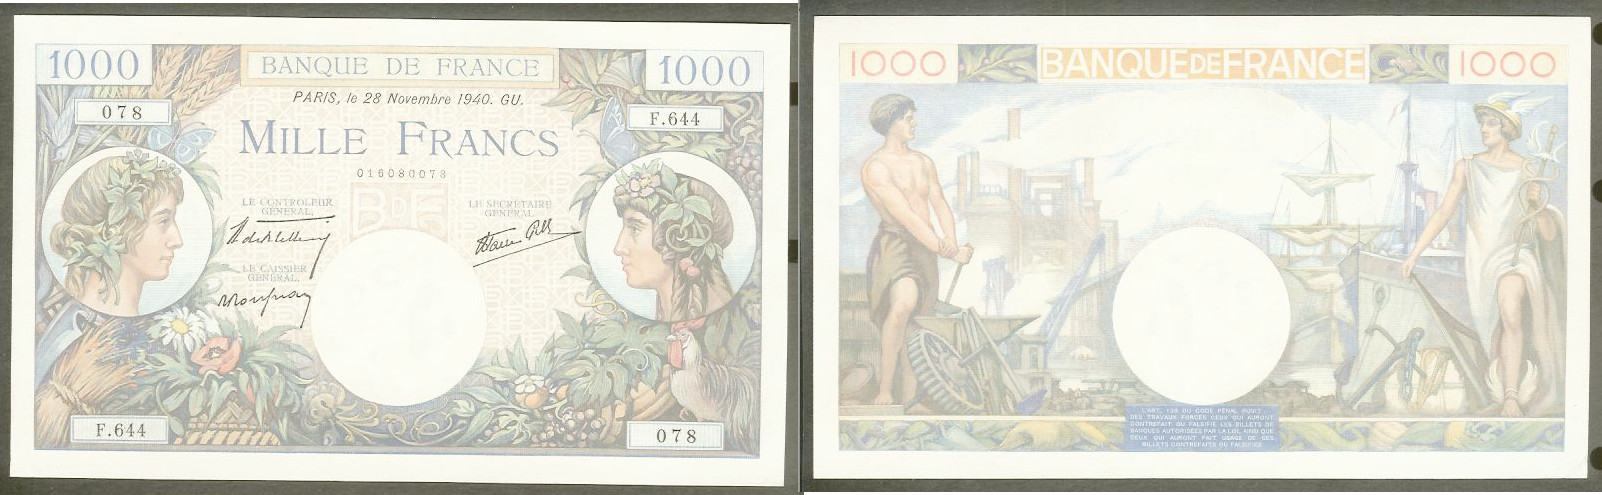 1000 Francs COMMERCE ET INDUSTRIE FRANCE 28.11.1940 NEUF